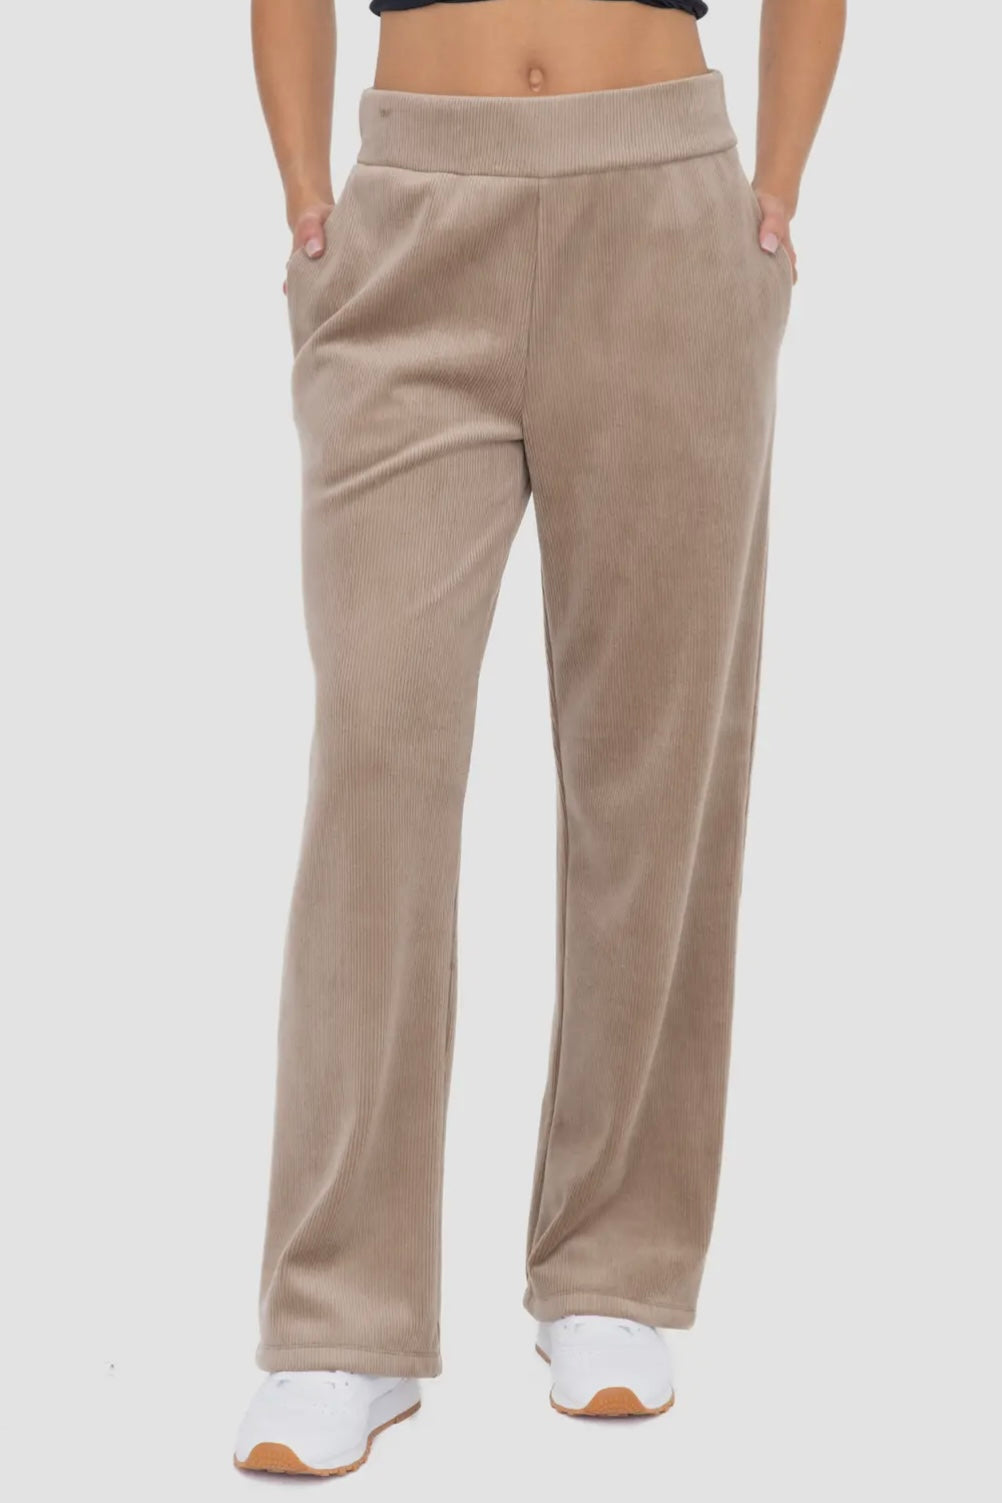 $20 SALE! Warm Gray Brushed Corduroy High Waist Lounge Pants reg. $42.99